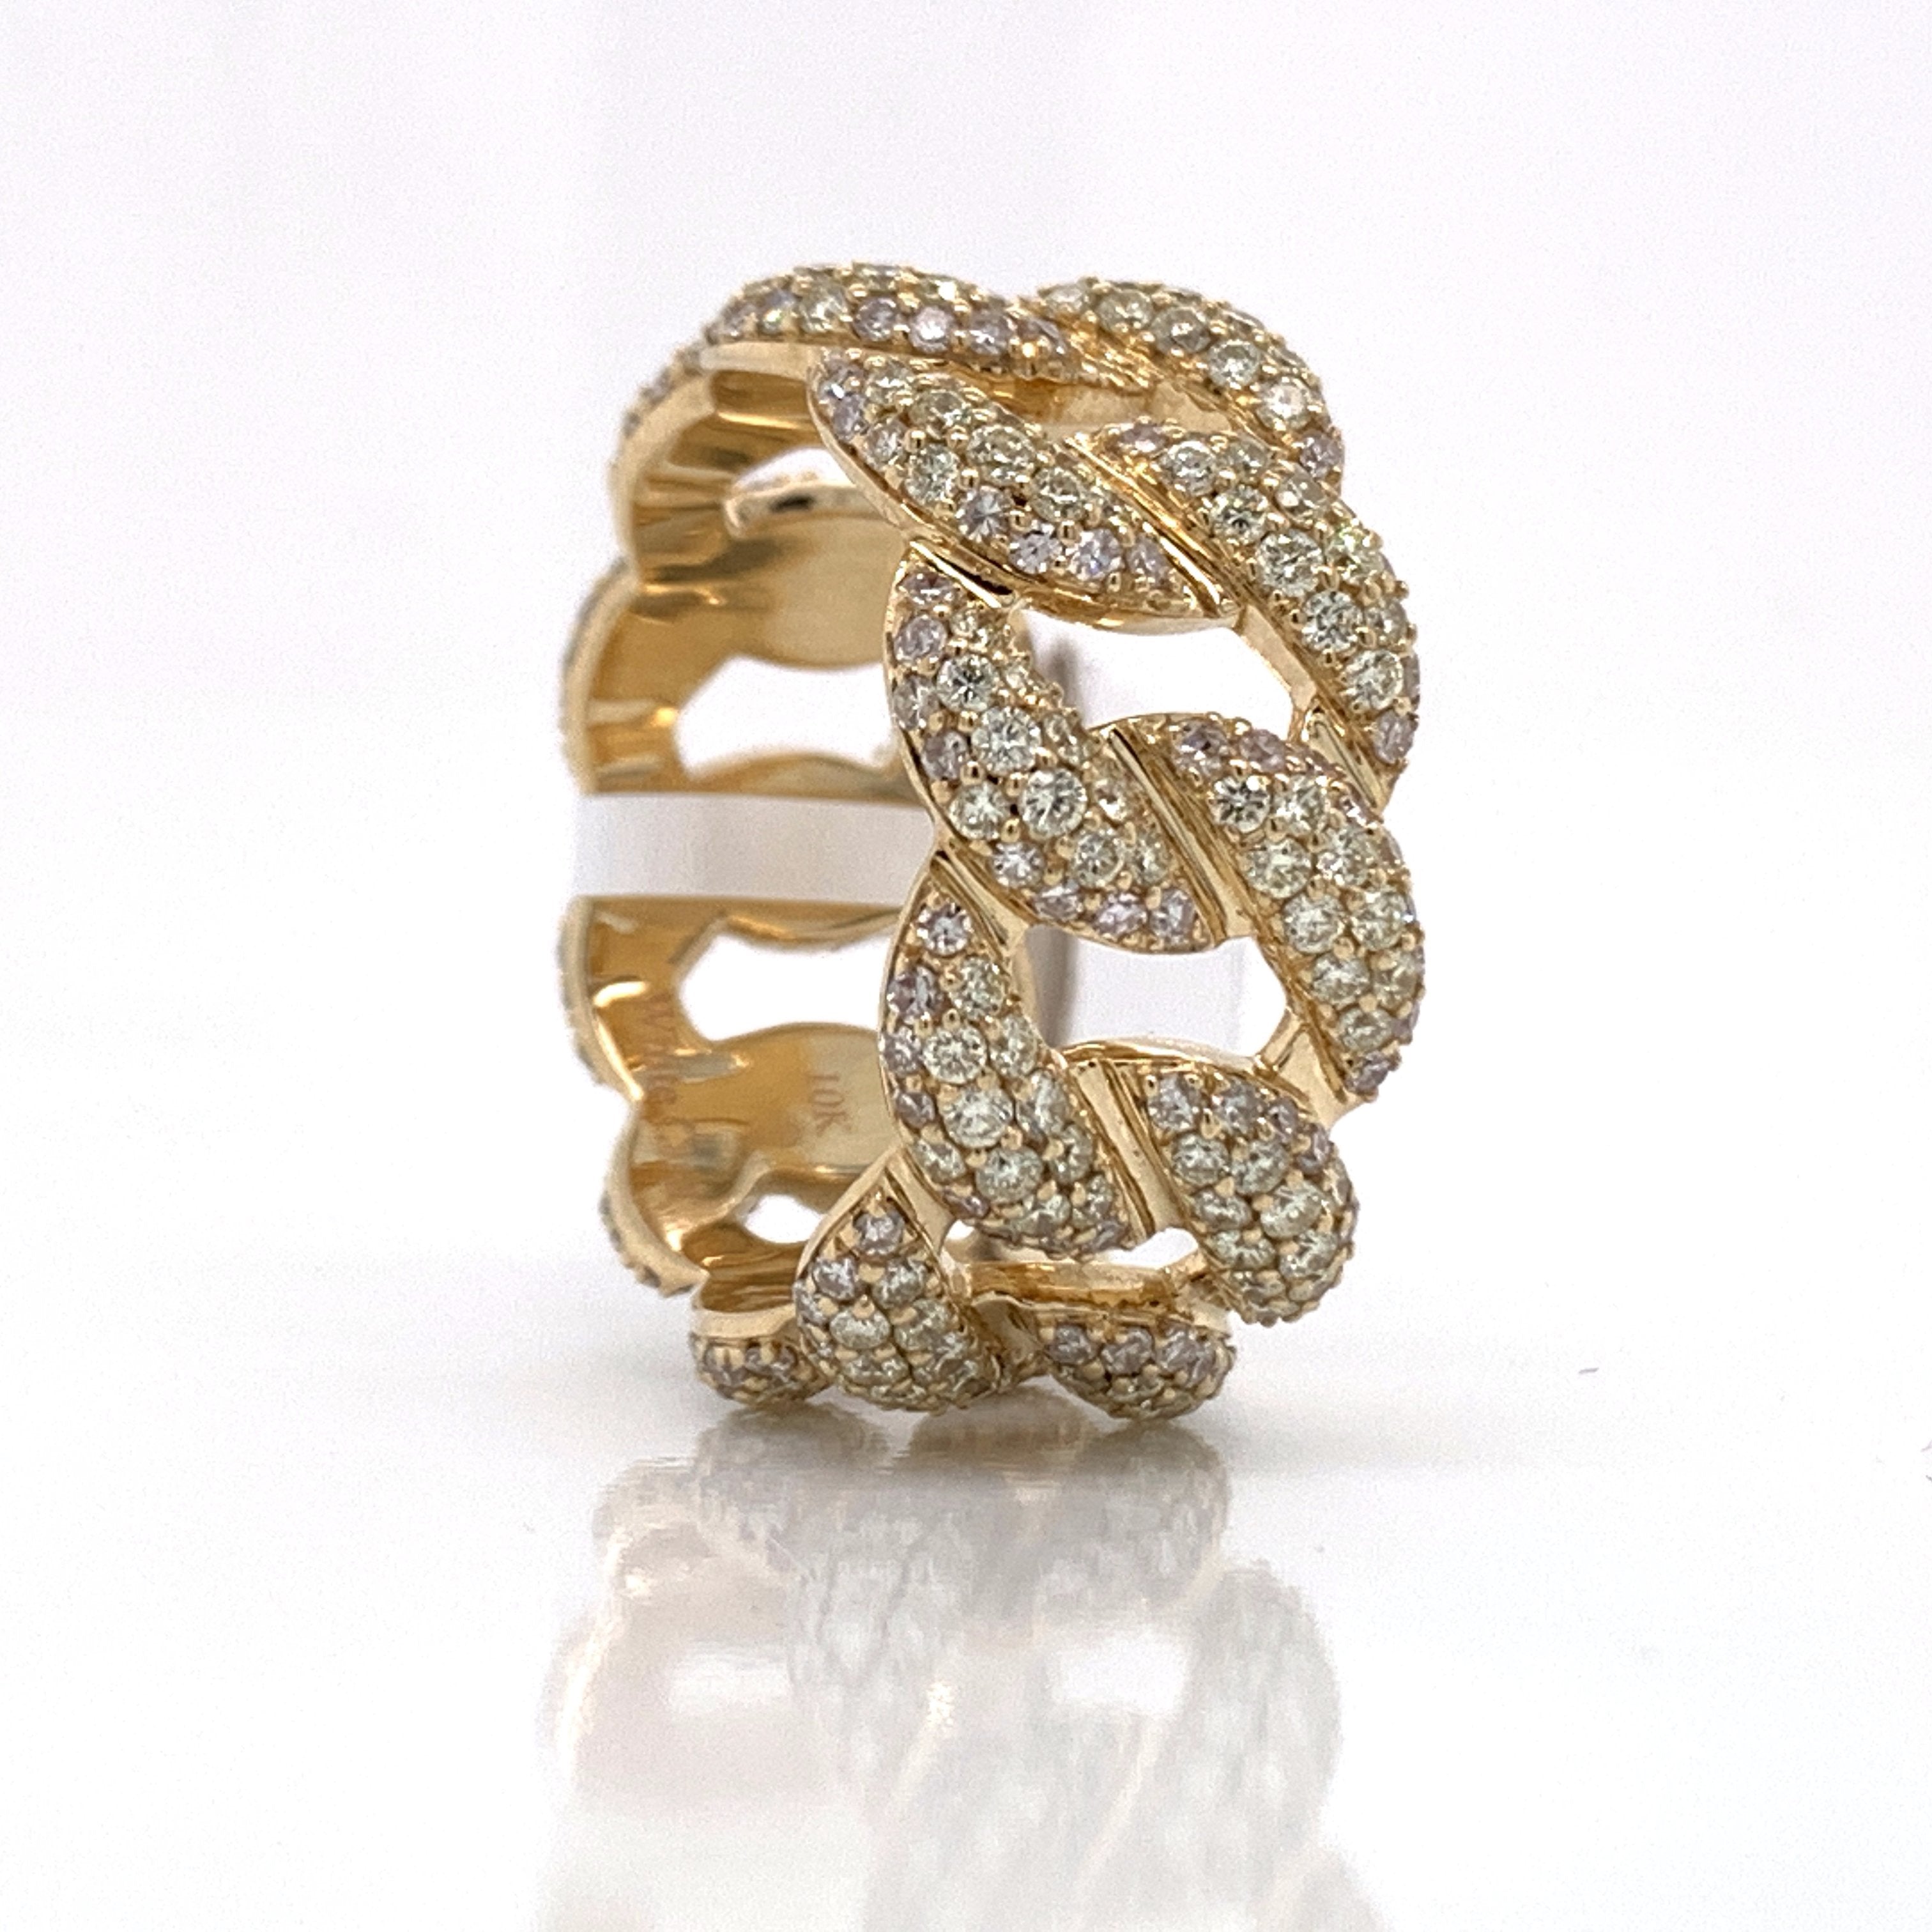 3.00 CT. Diamond 10KT Gold Ring - White Carat Diamonds 